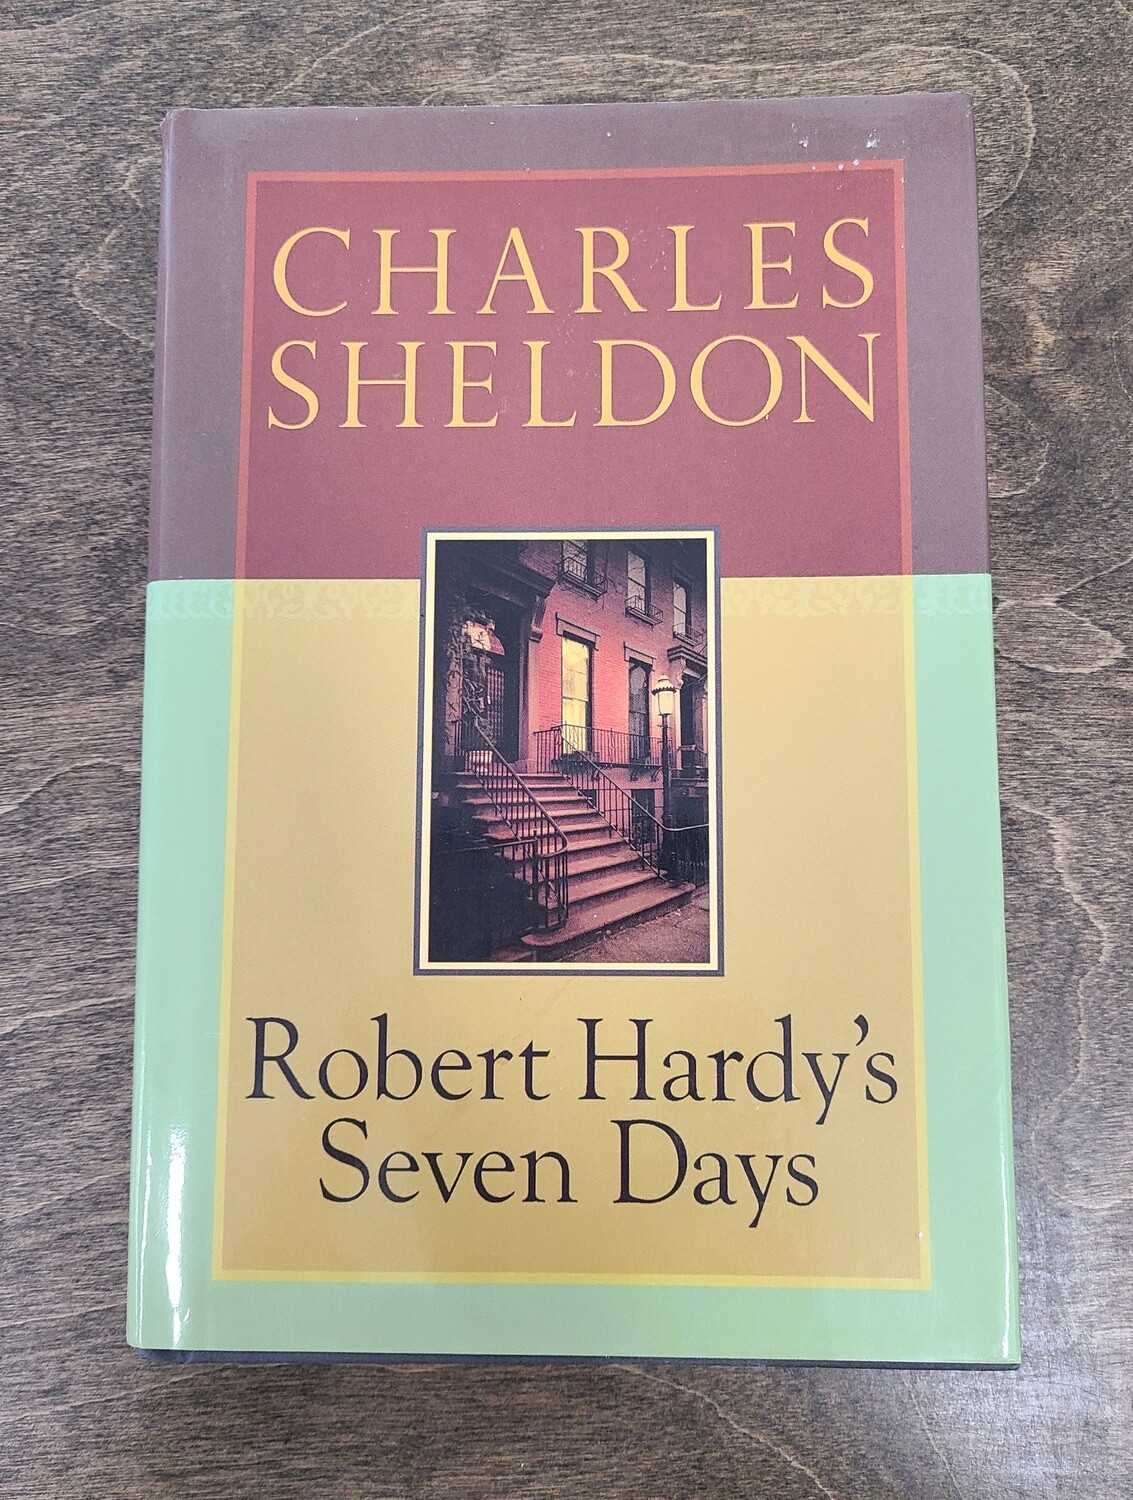 Robert Hardy's Seven Days by Charles Sheldon